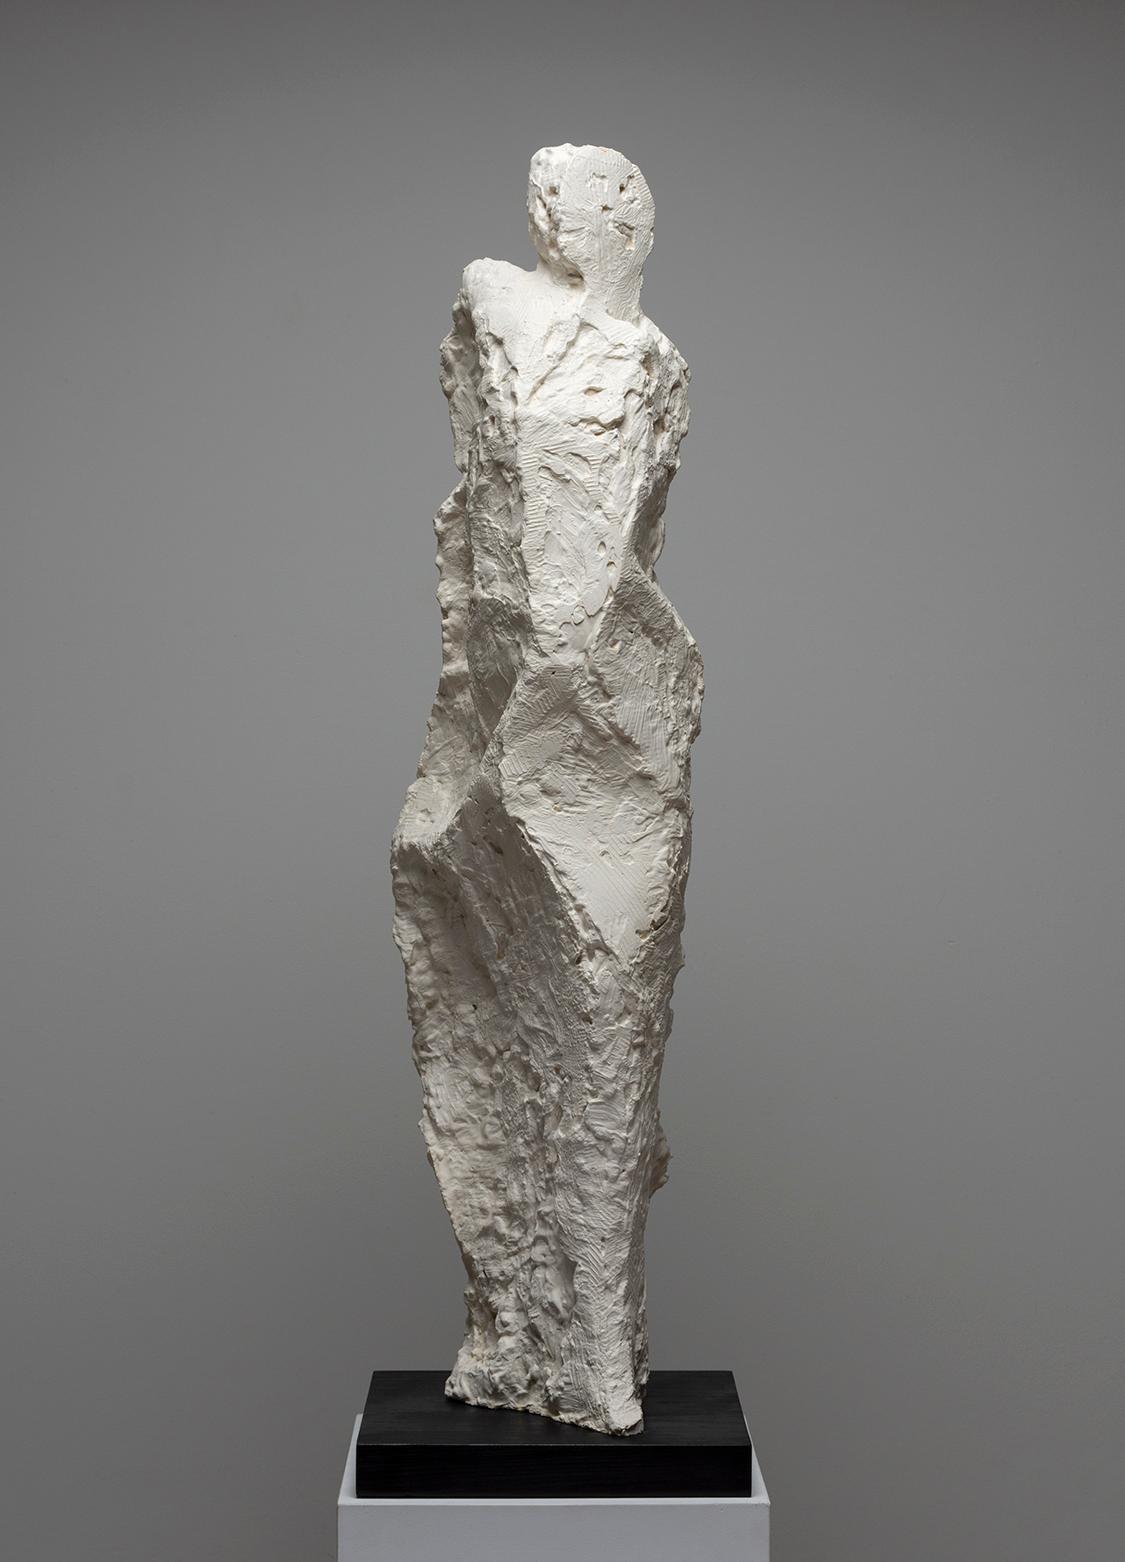 Michael O'Keefe Figurative Sculpture - Full of Abandon, Full of Grace